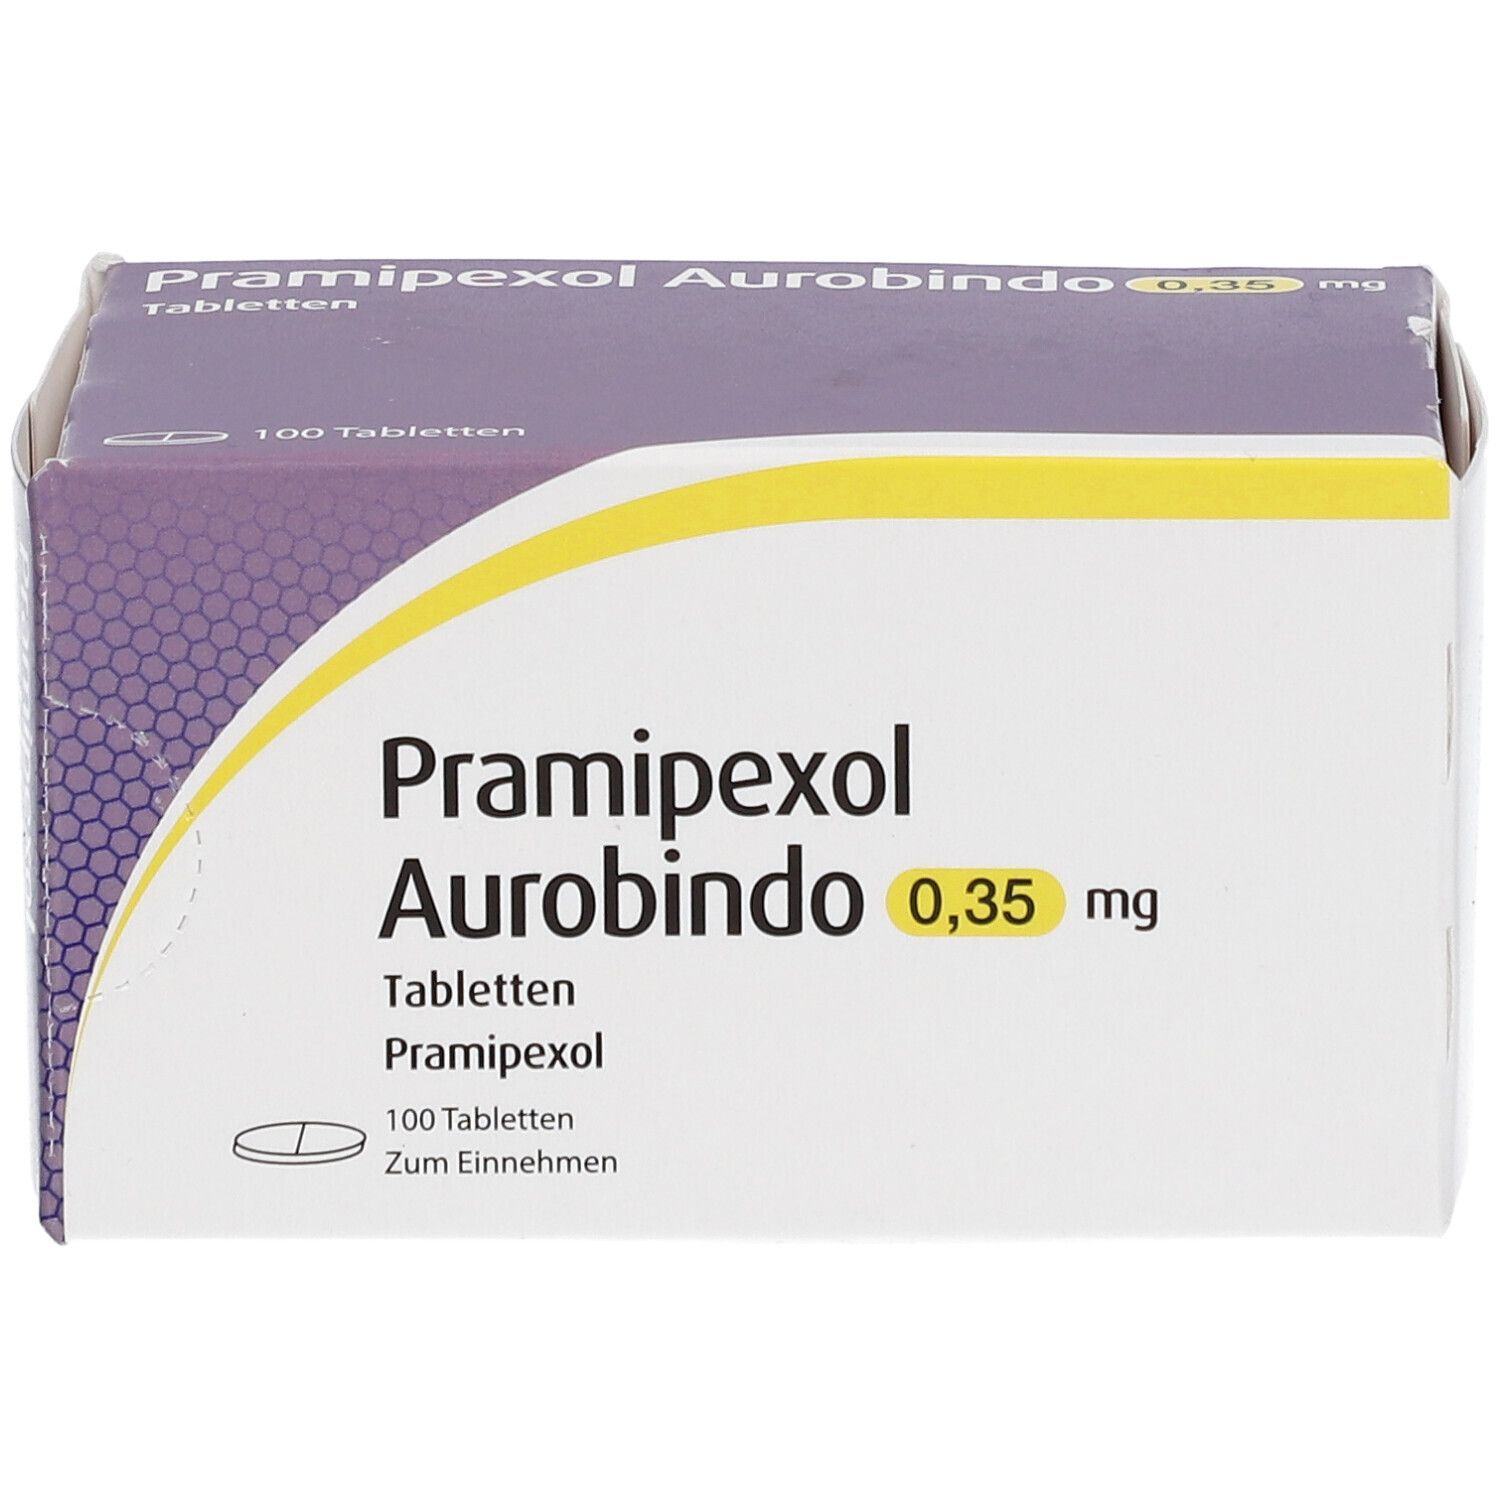 Pramipexol Aurobindo 0,35 mg